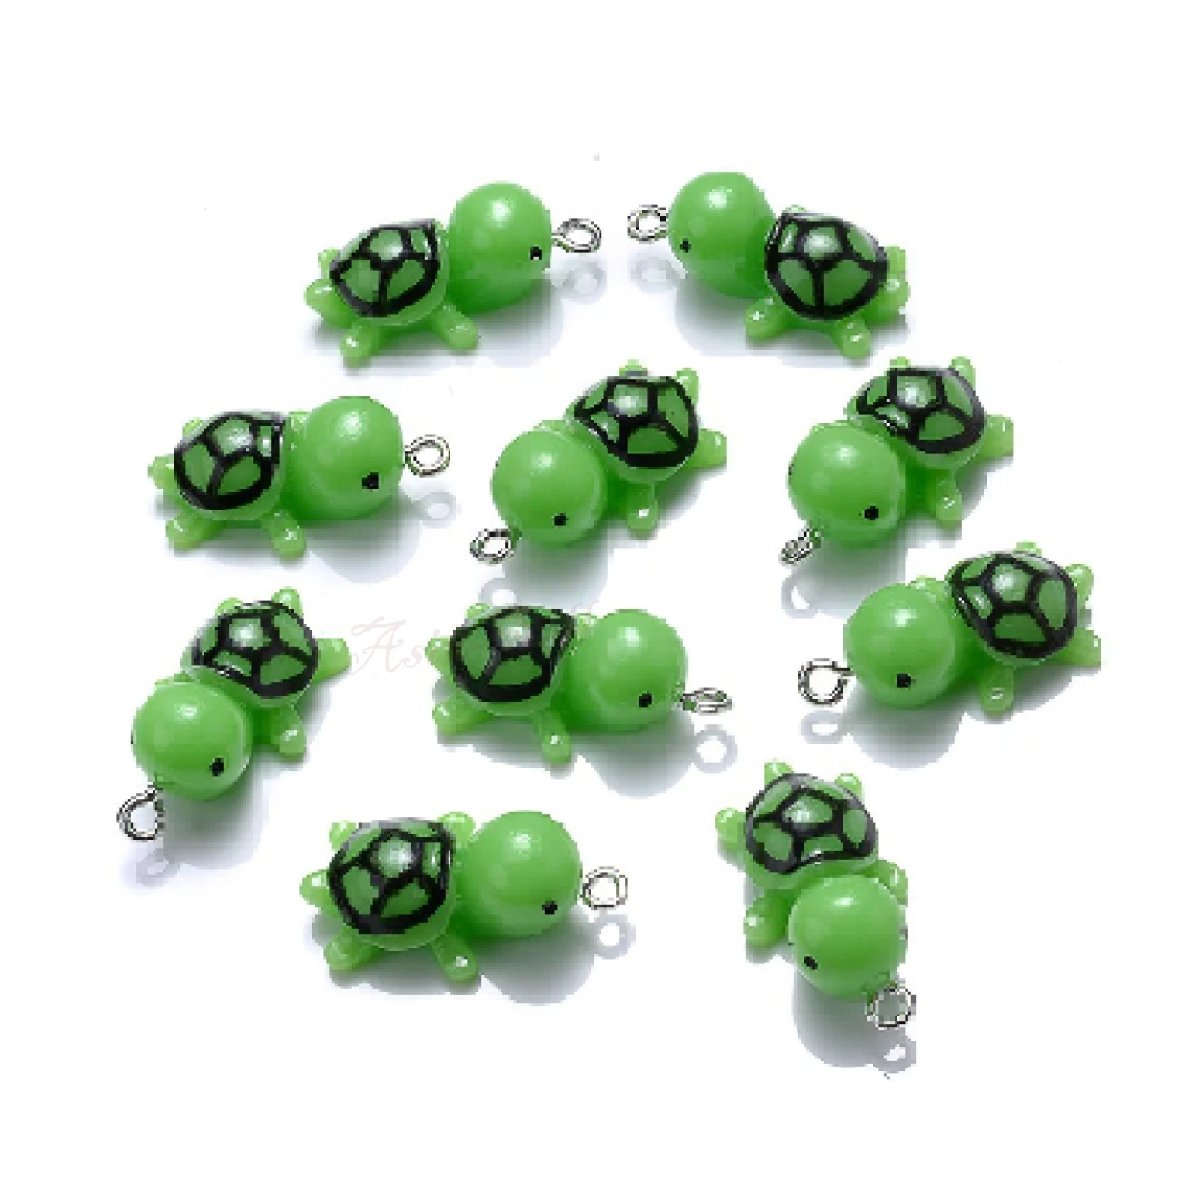 10pcs Miniature Mini Garden Animal Figurines Charms with Loop Pendant Craft - Turtles - Asia Sell